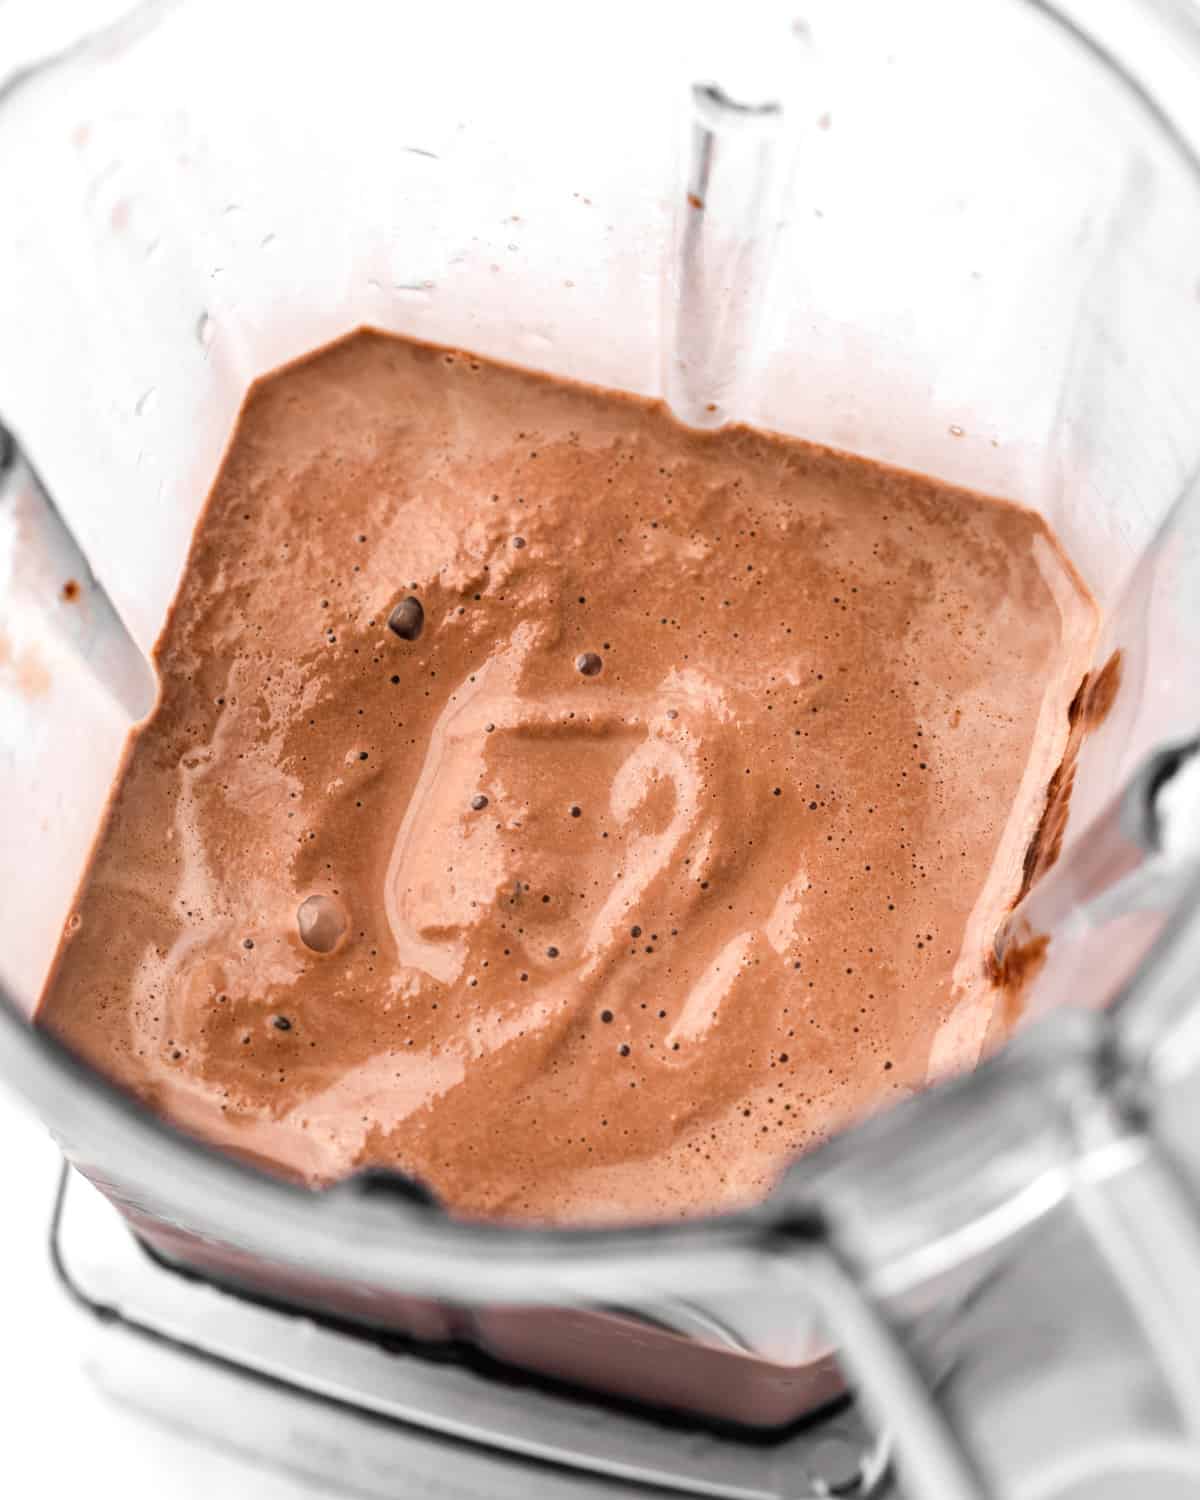 how to make a chocolate milkshake - ingredients in a blender after blending